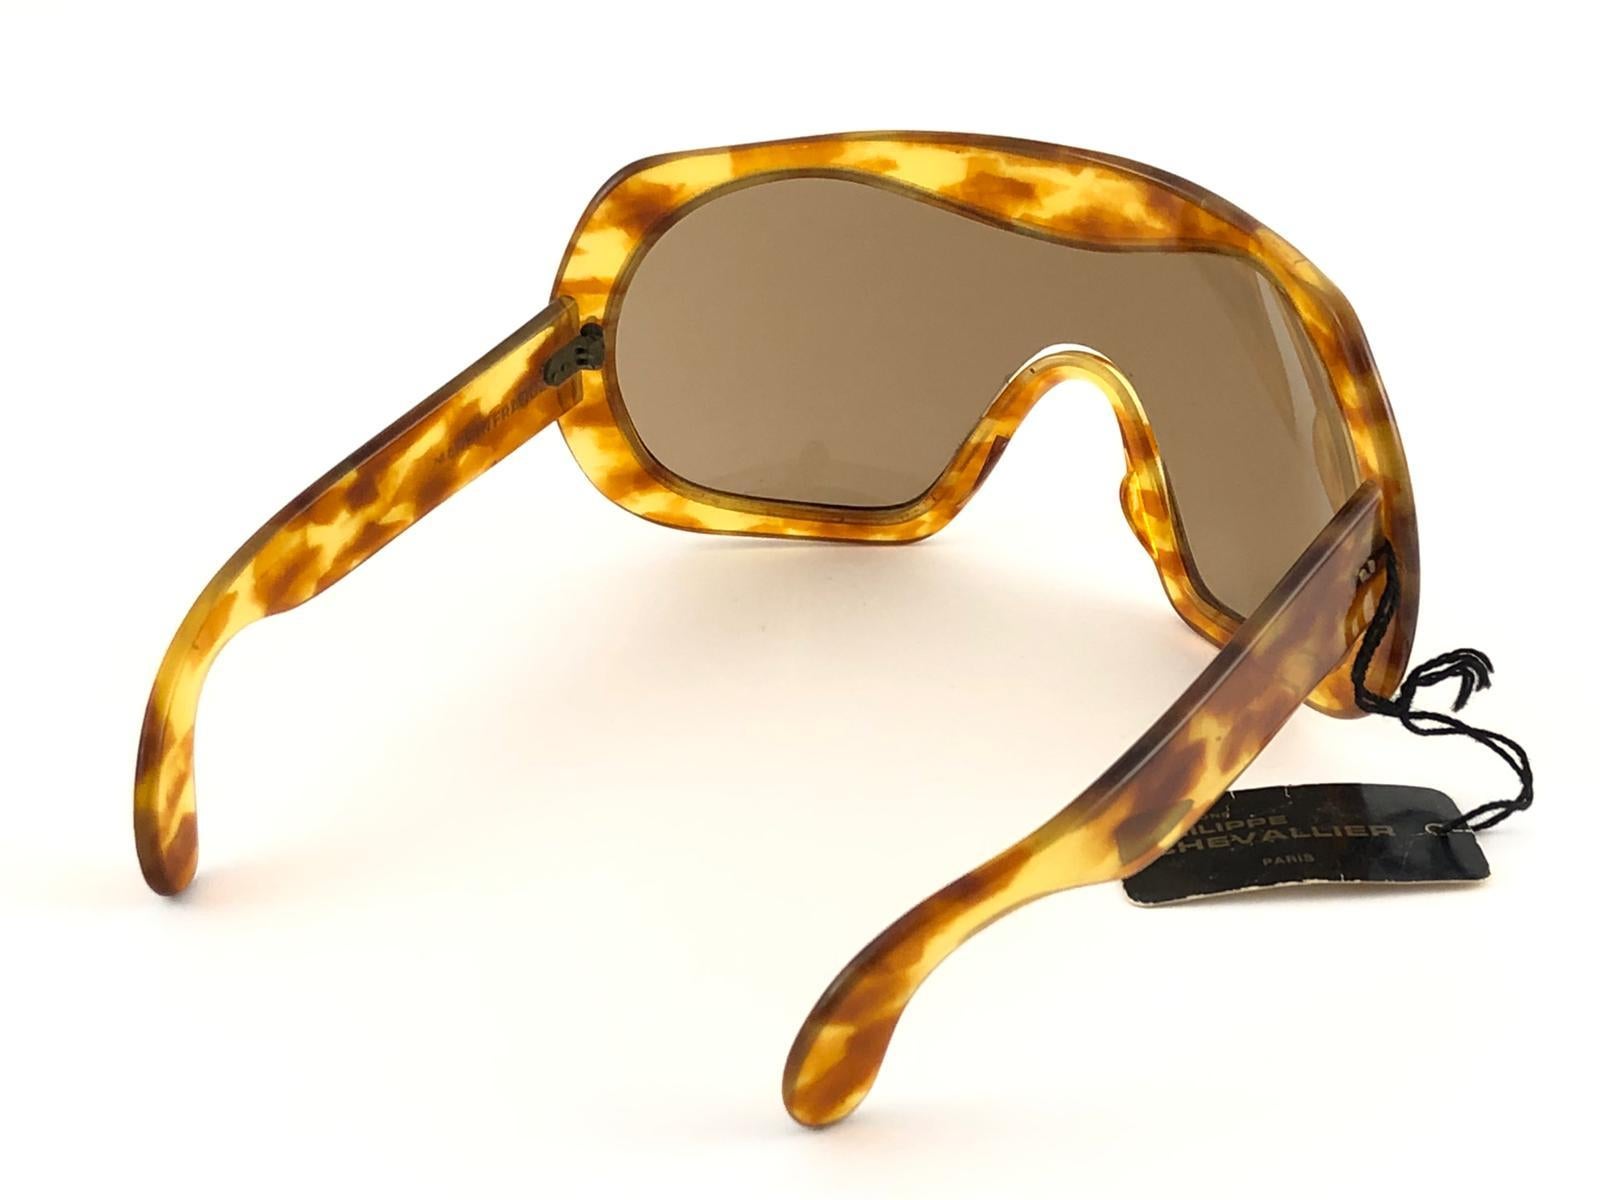 New Vintage Philippe Chevallier II Light Tortoise Miles Davis 1960 Sunglasses For Sale 1